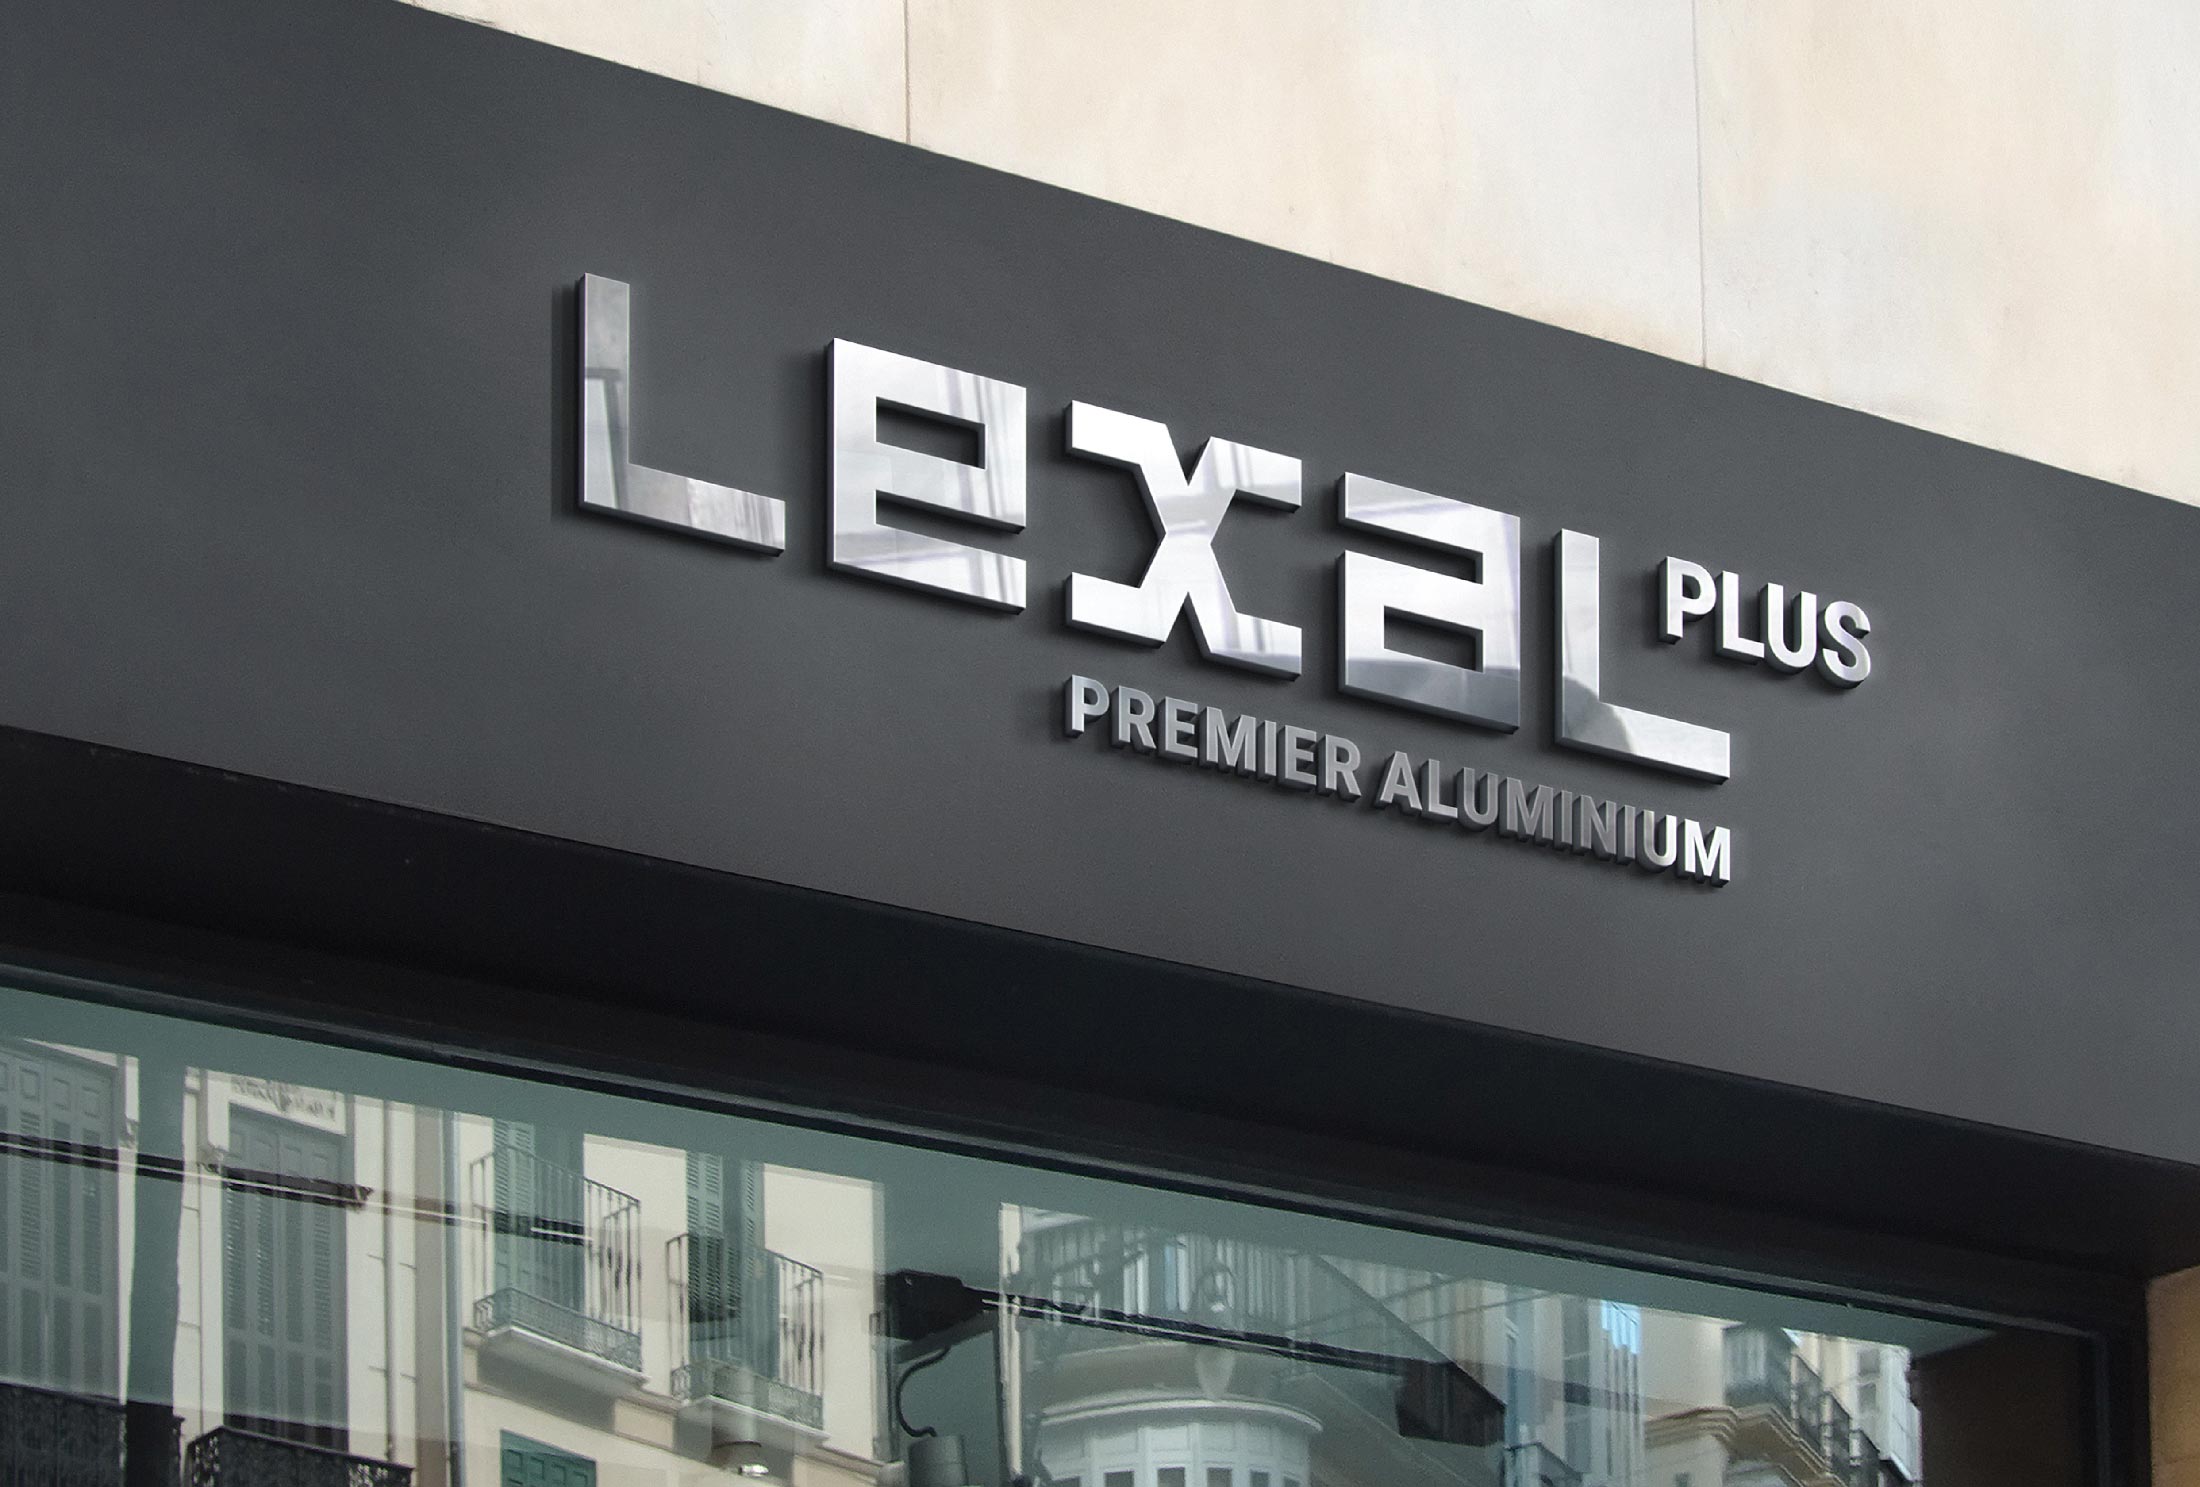 Lexal Plus